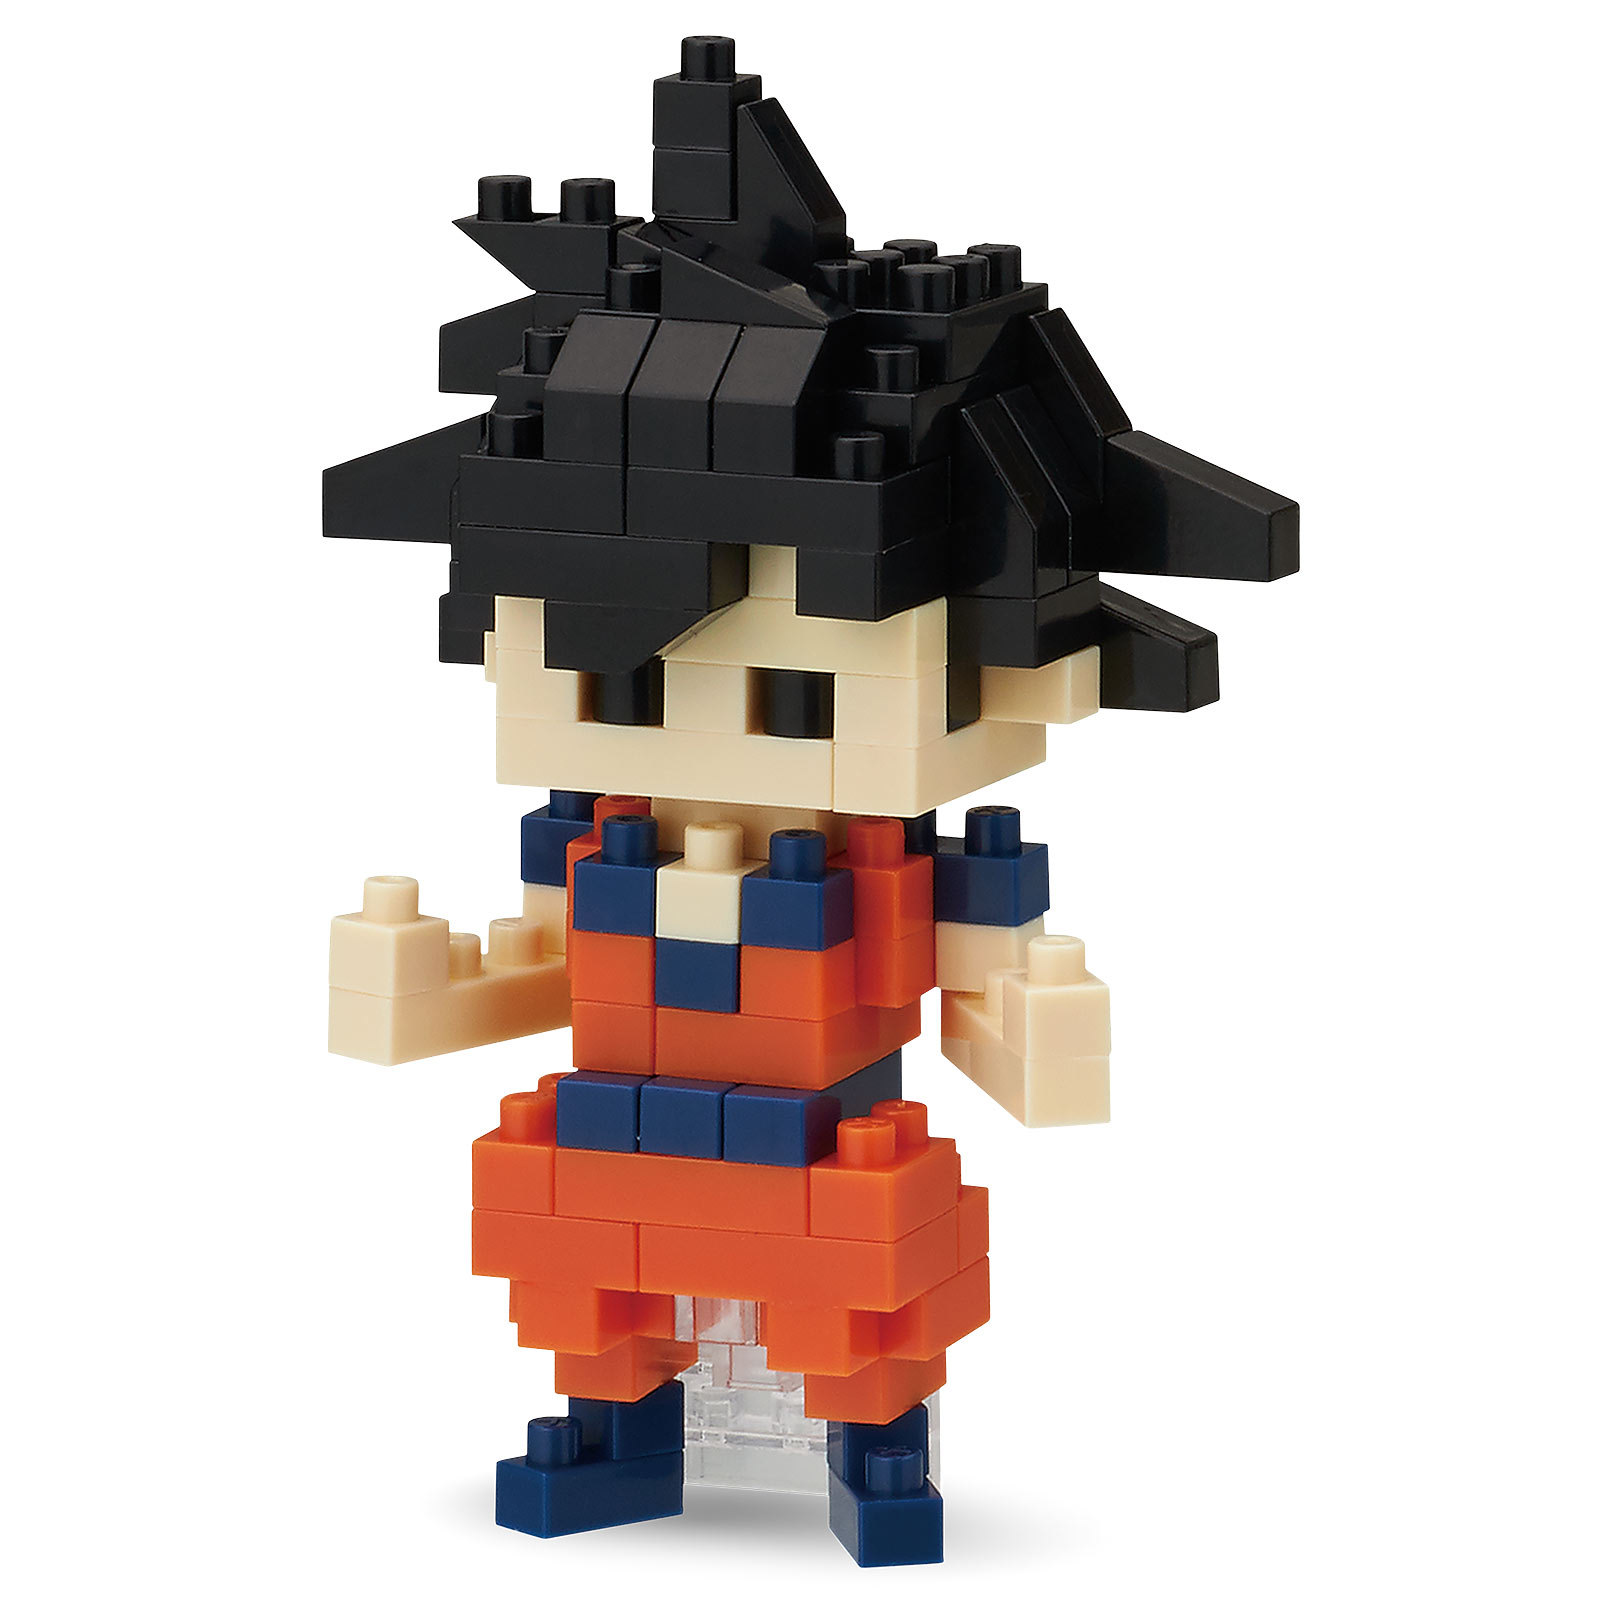 Dragon Ball Z - Goku nanoblock Mini Building Block Figure